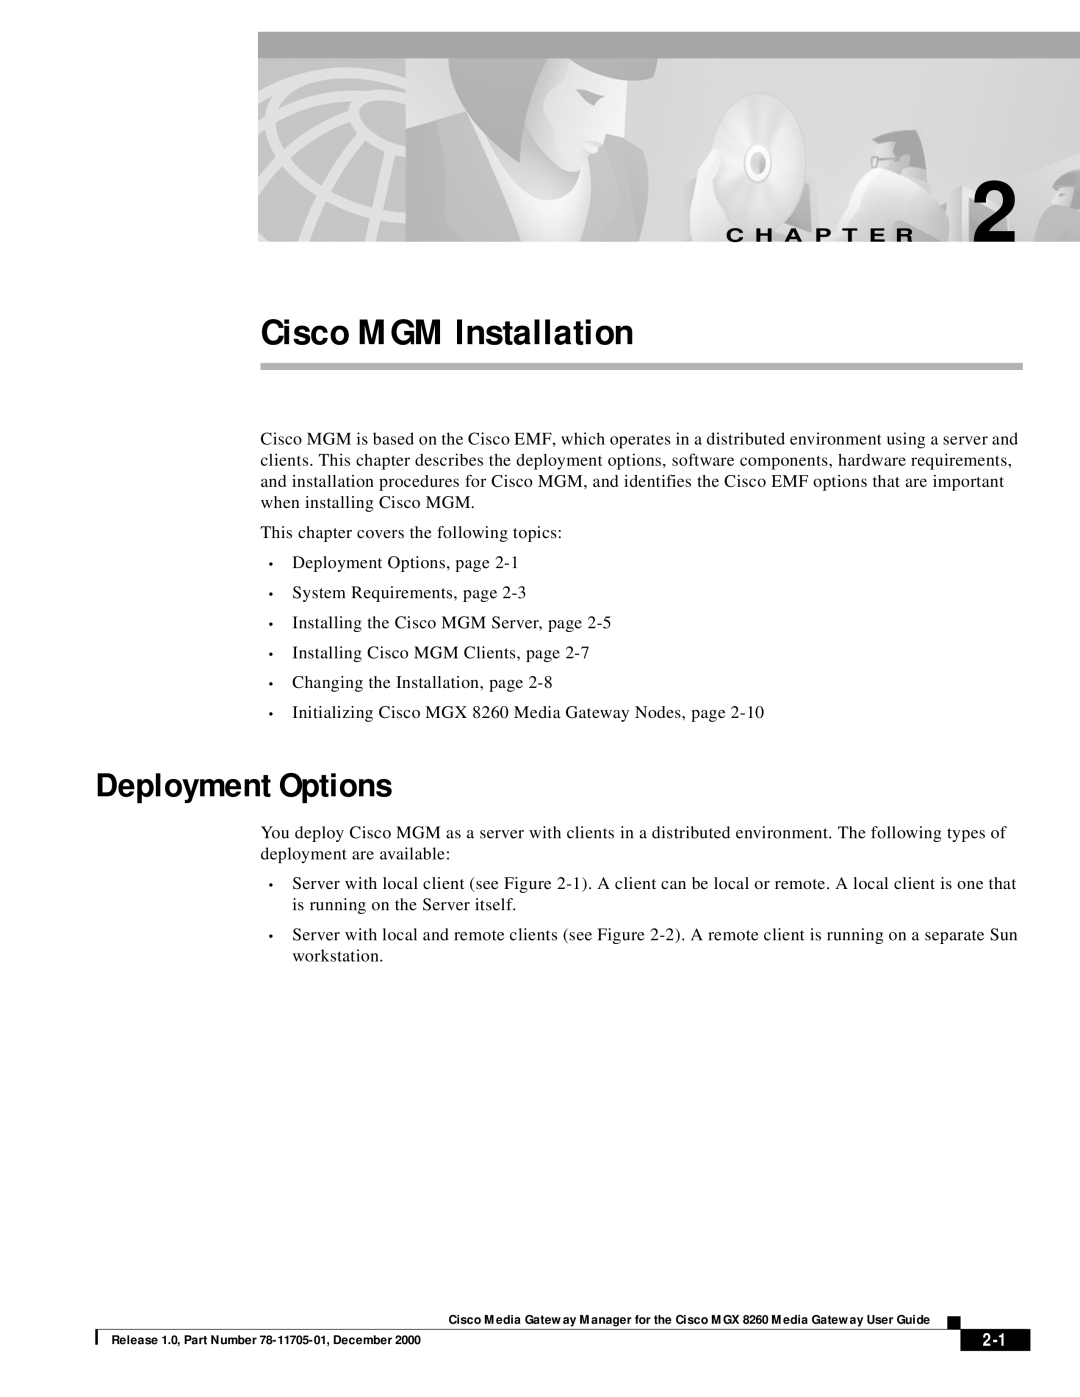 Cisco Systems MGX 8260 manual Deployment Options, Cisco MGM Installation, C H A P T E R 